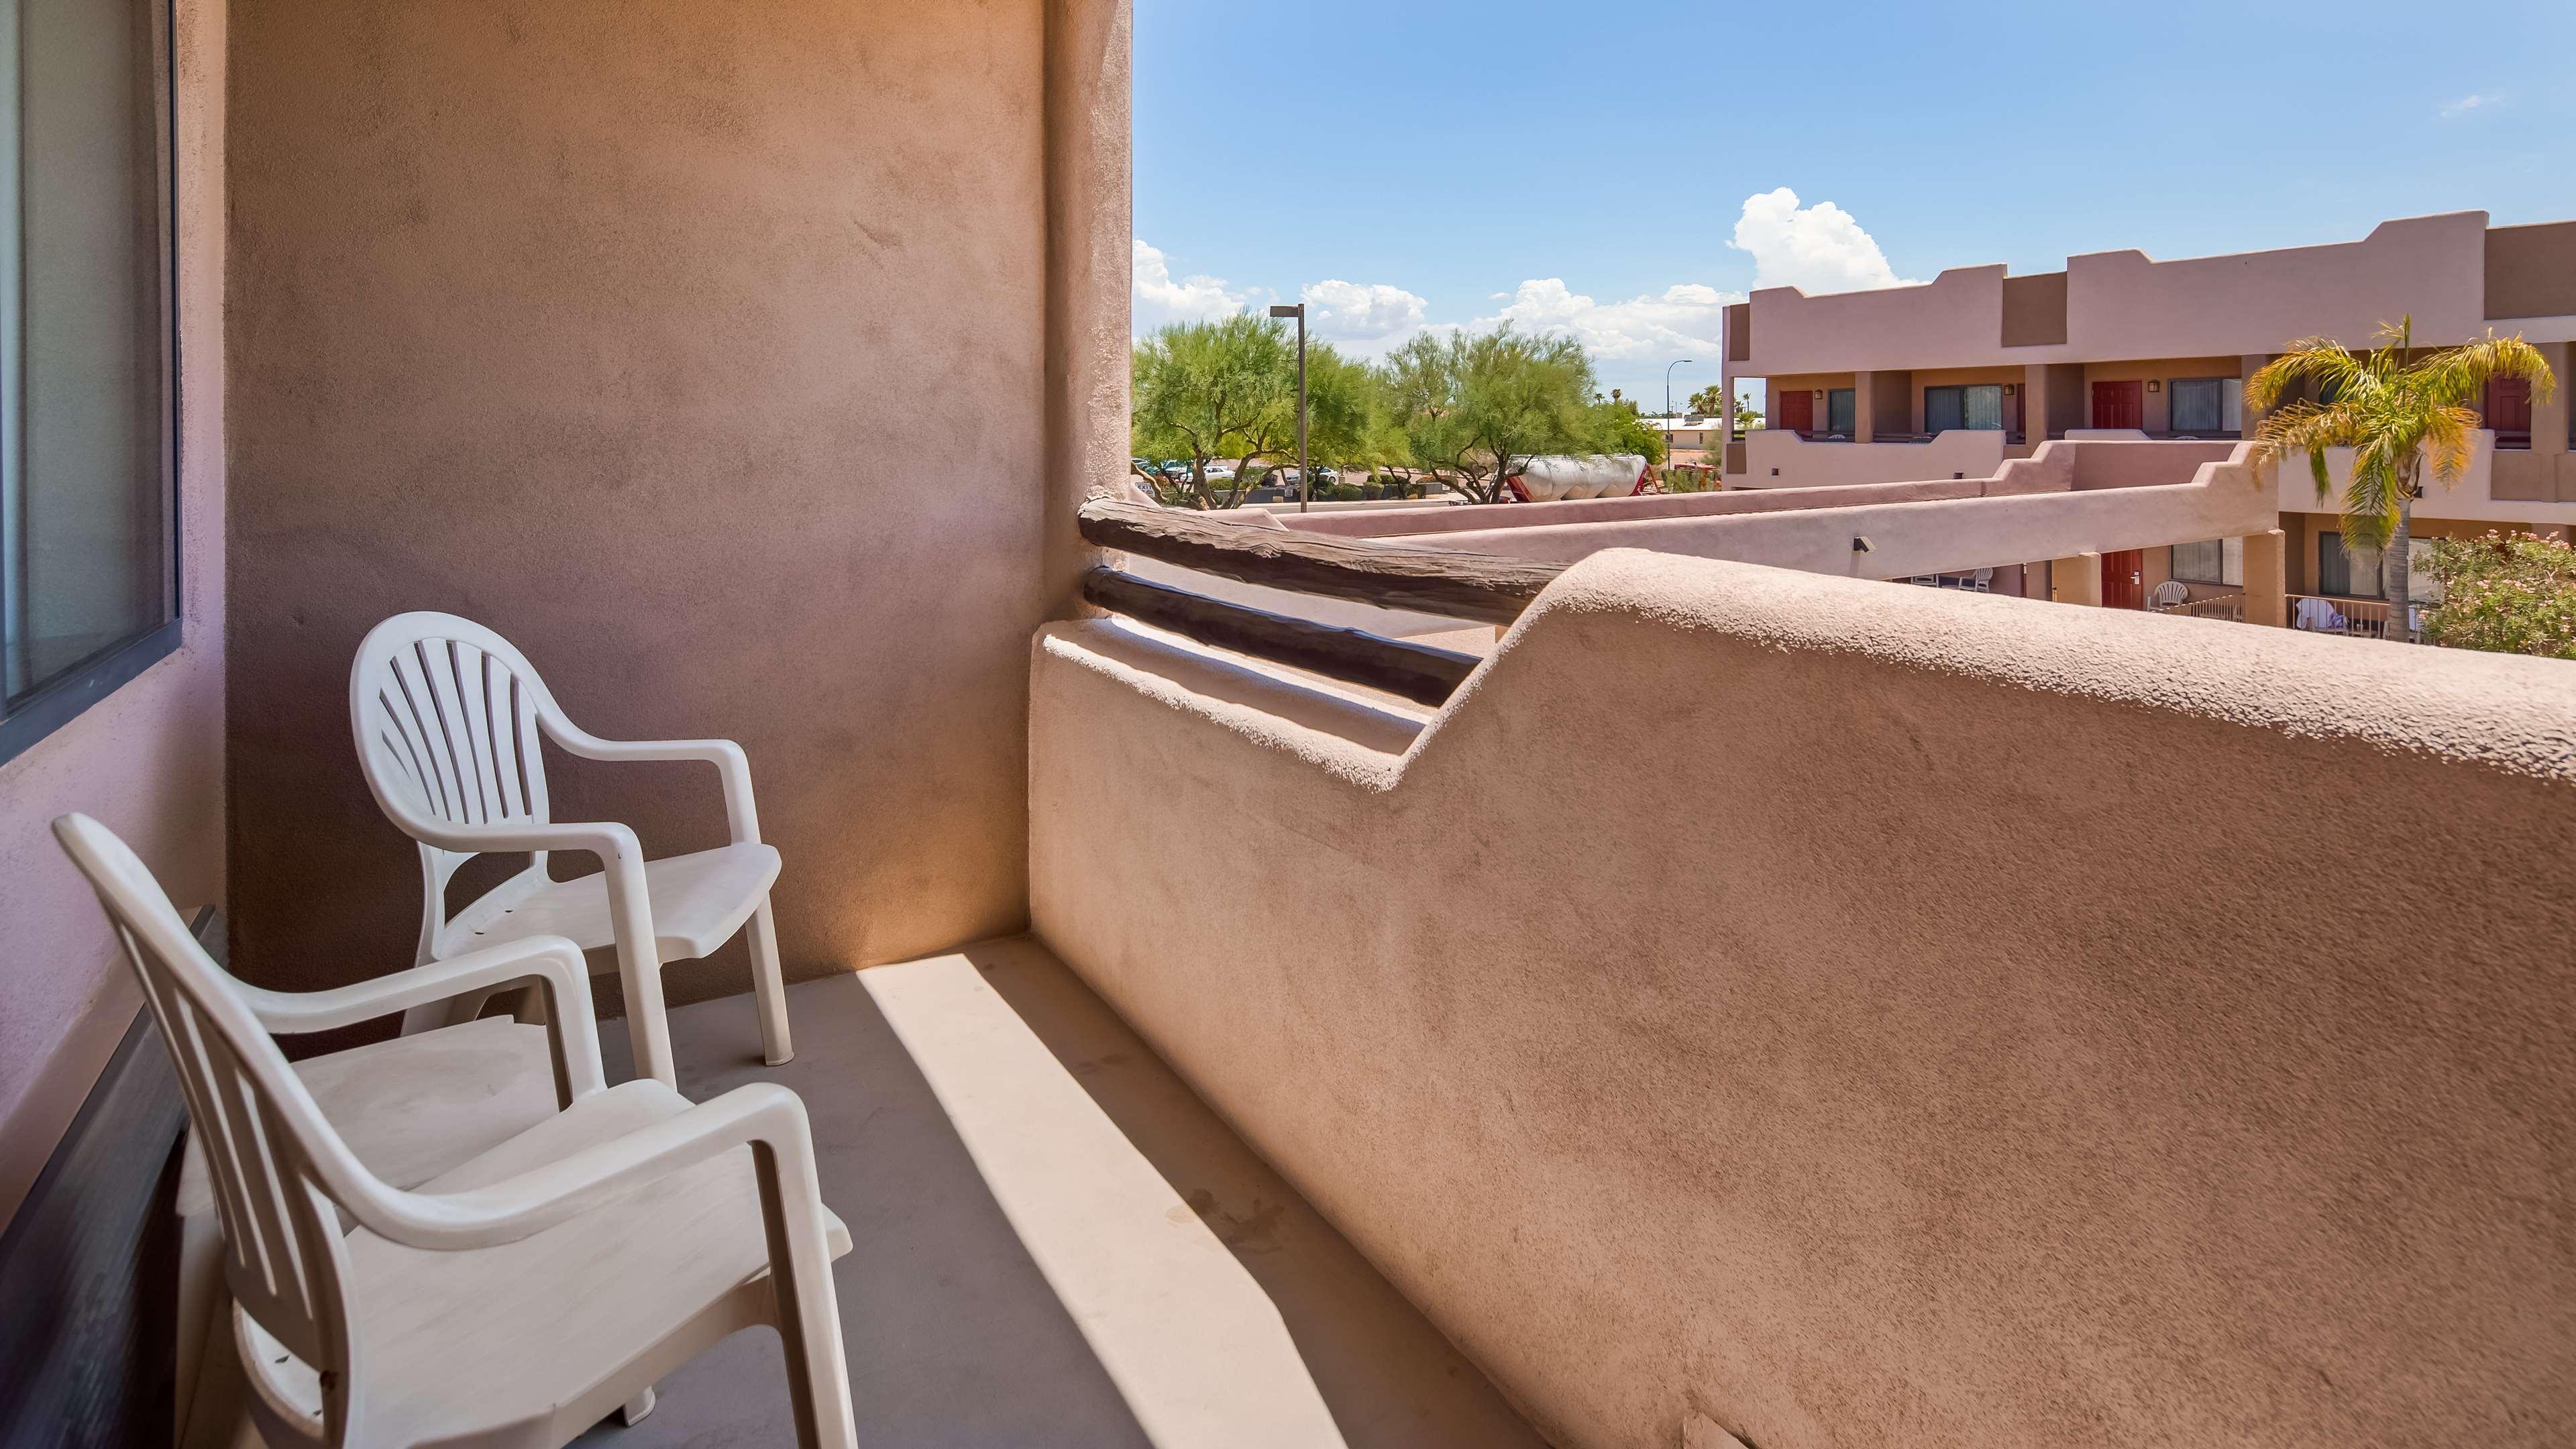 Best Western Apache Junction Inn Exterior photo